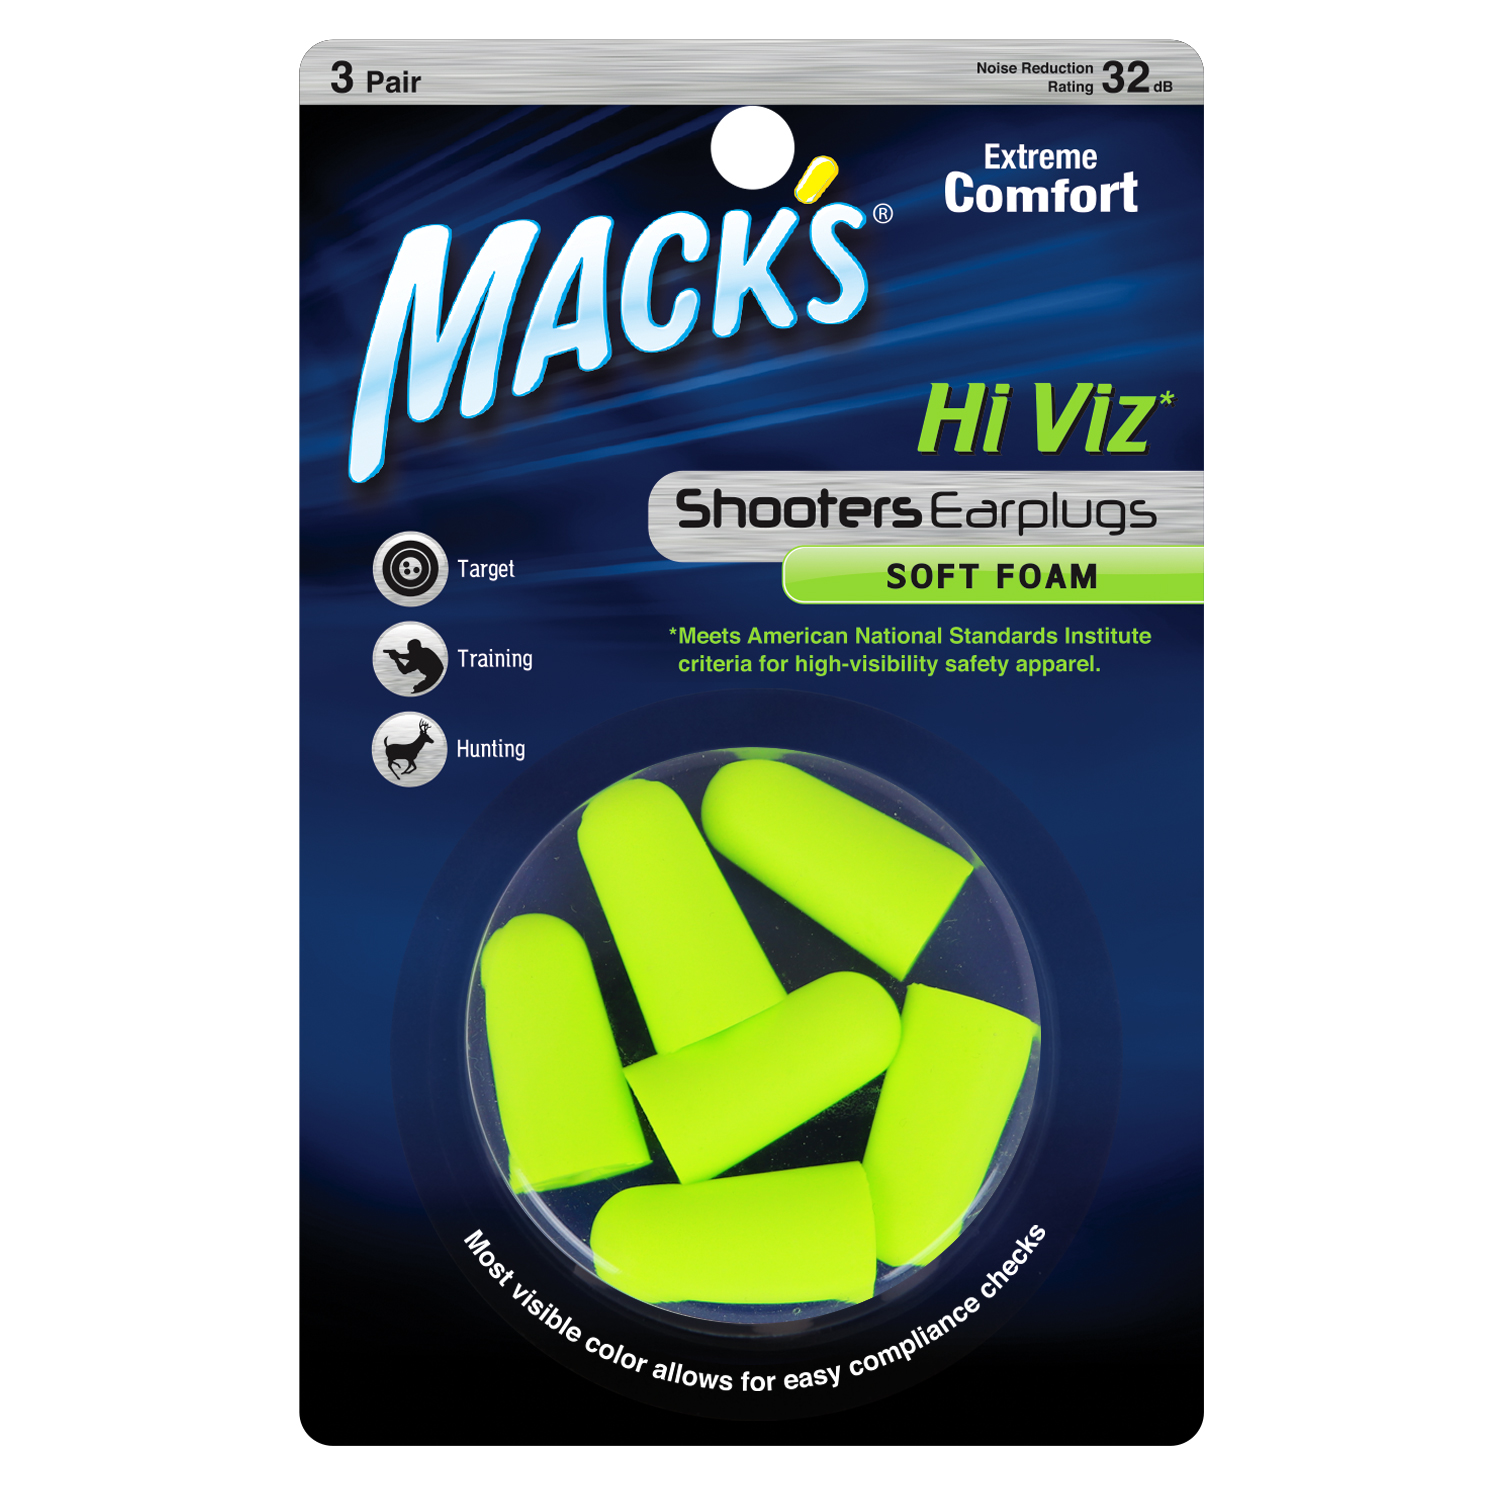 MACKS Shooting Earplugs Mack's Shooters Hi Viz Soft Foam Ear Plugs 7 Pairs for sale online 